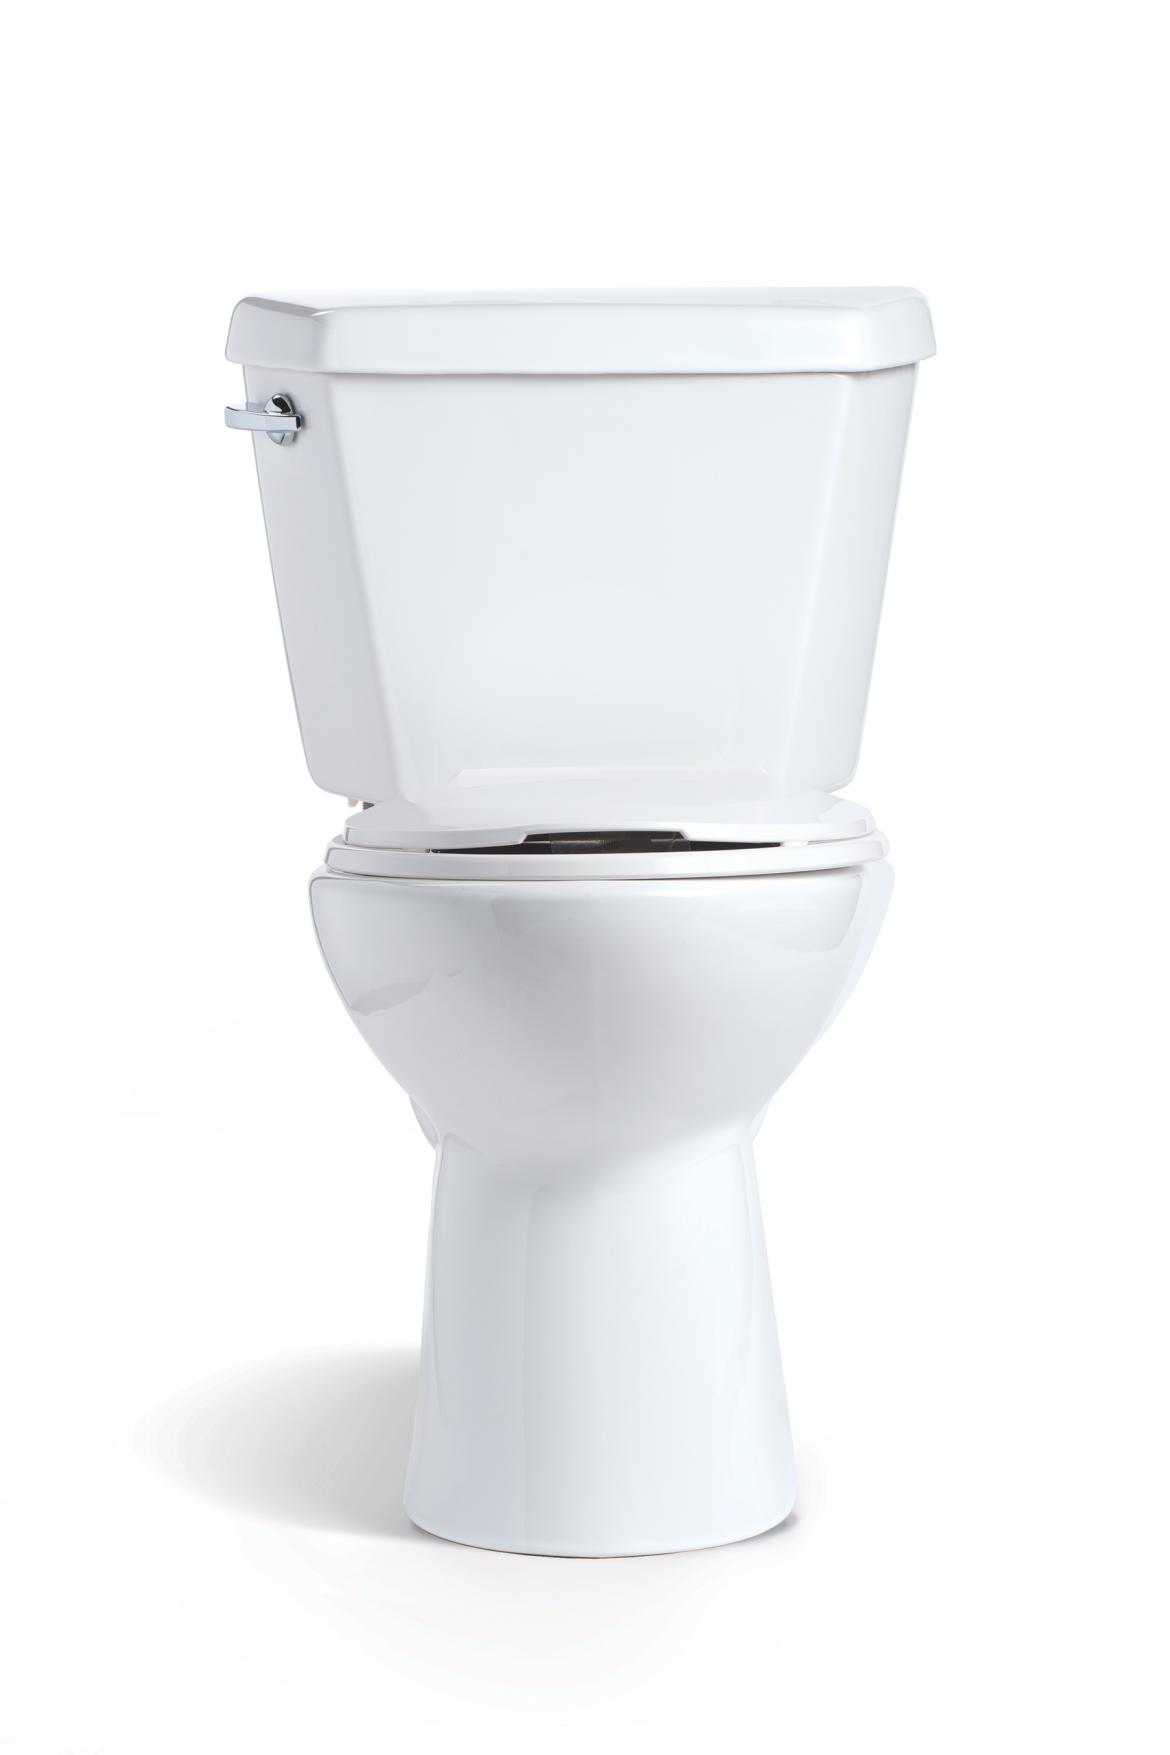 Mansfield Plumbing Denali toilet